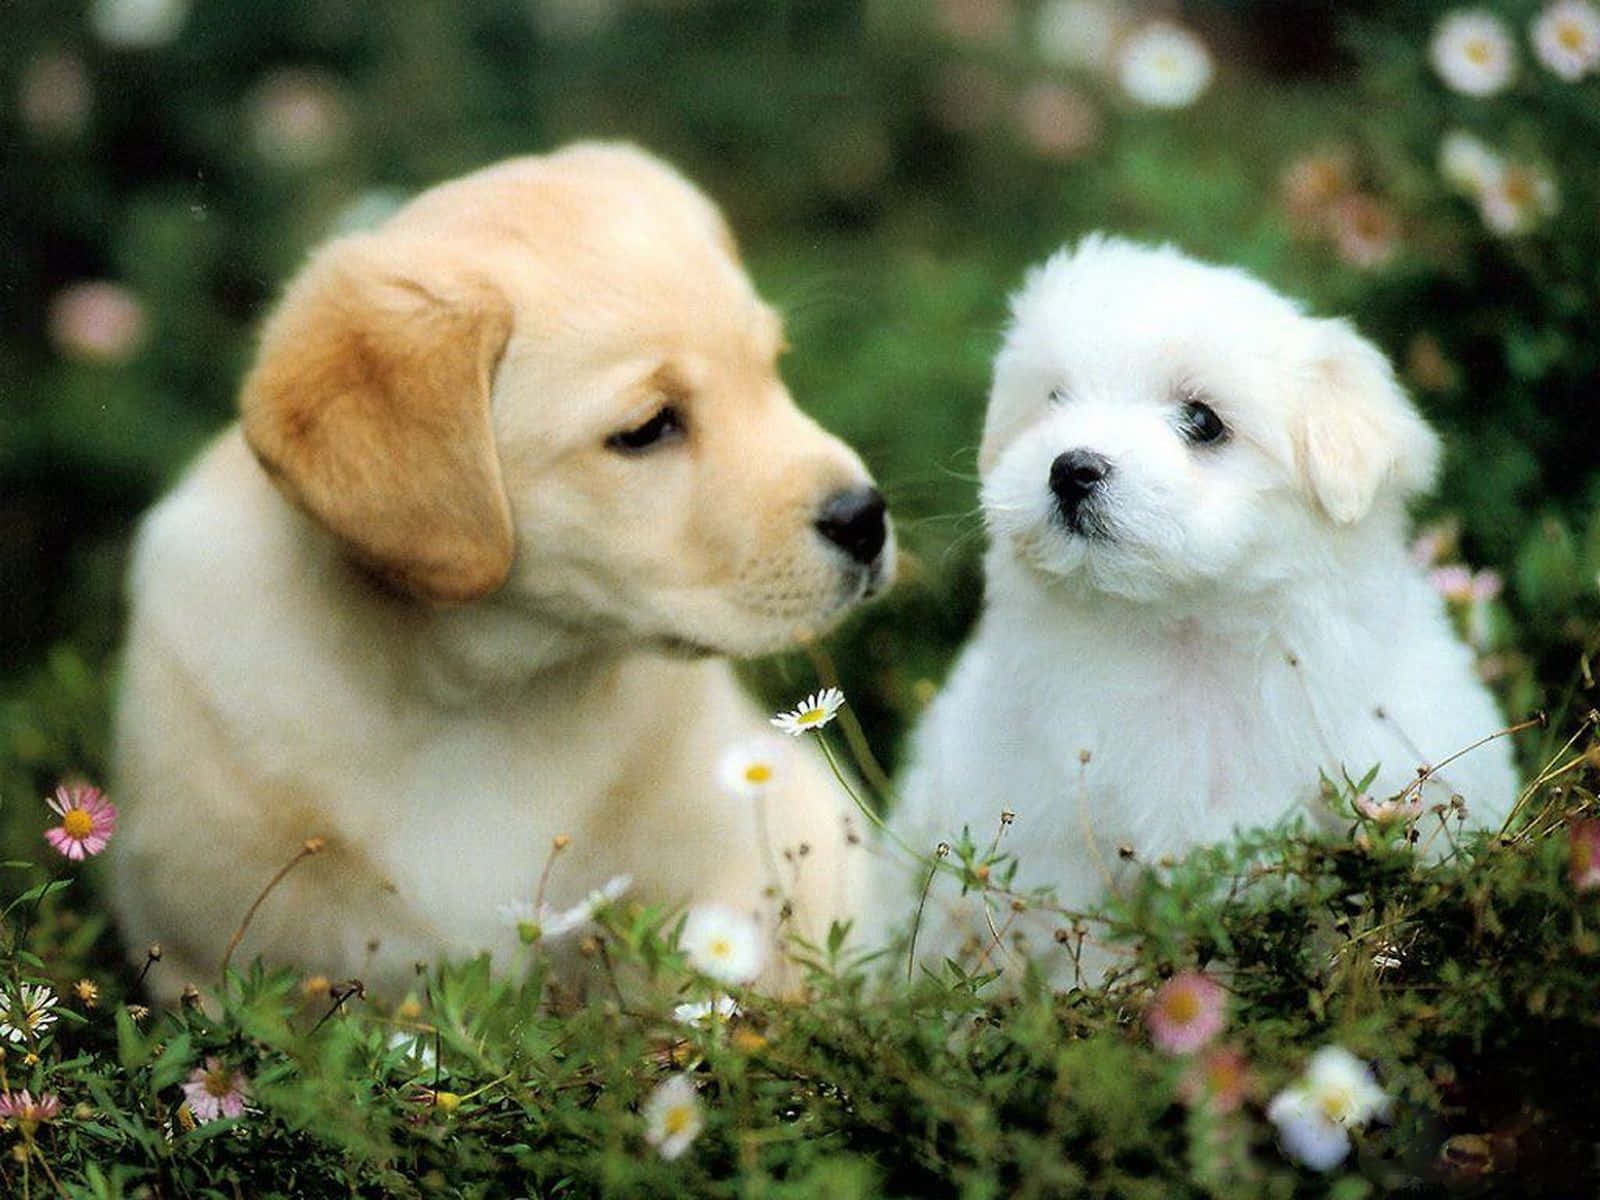 Adorable Puppies Enjoying Nature Together